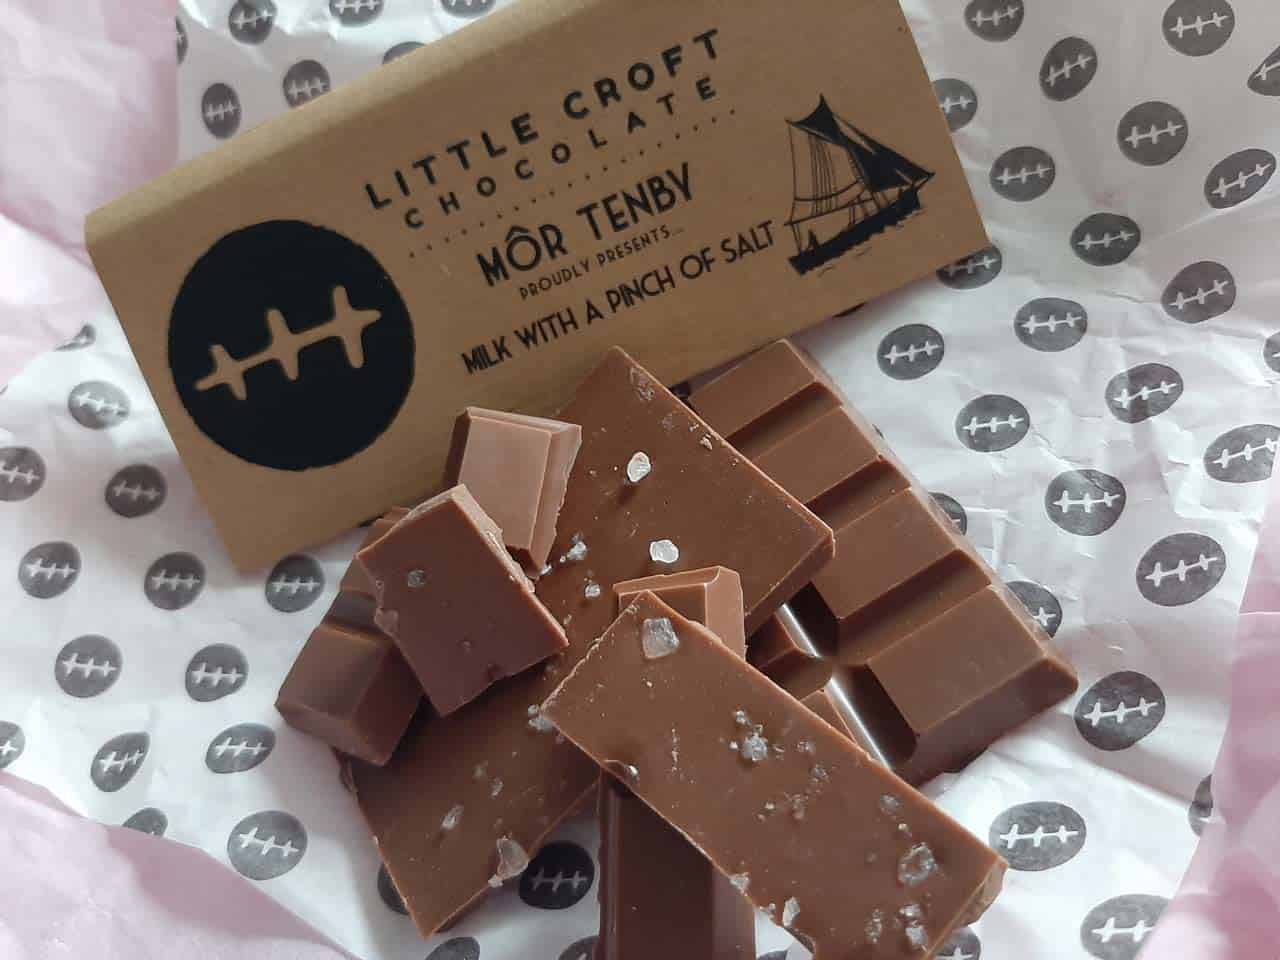 Môr of Tenby Coffi Da and Little Croft Chocolate bar